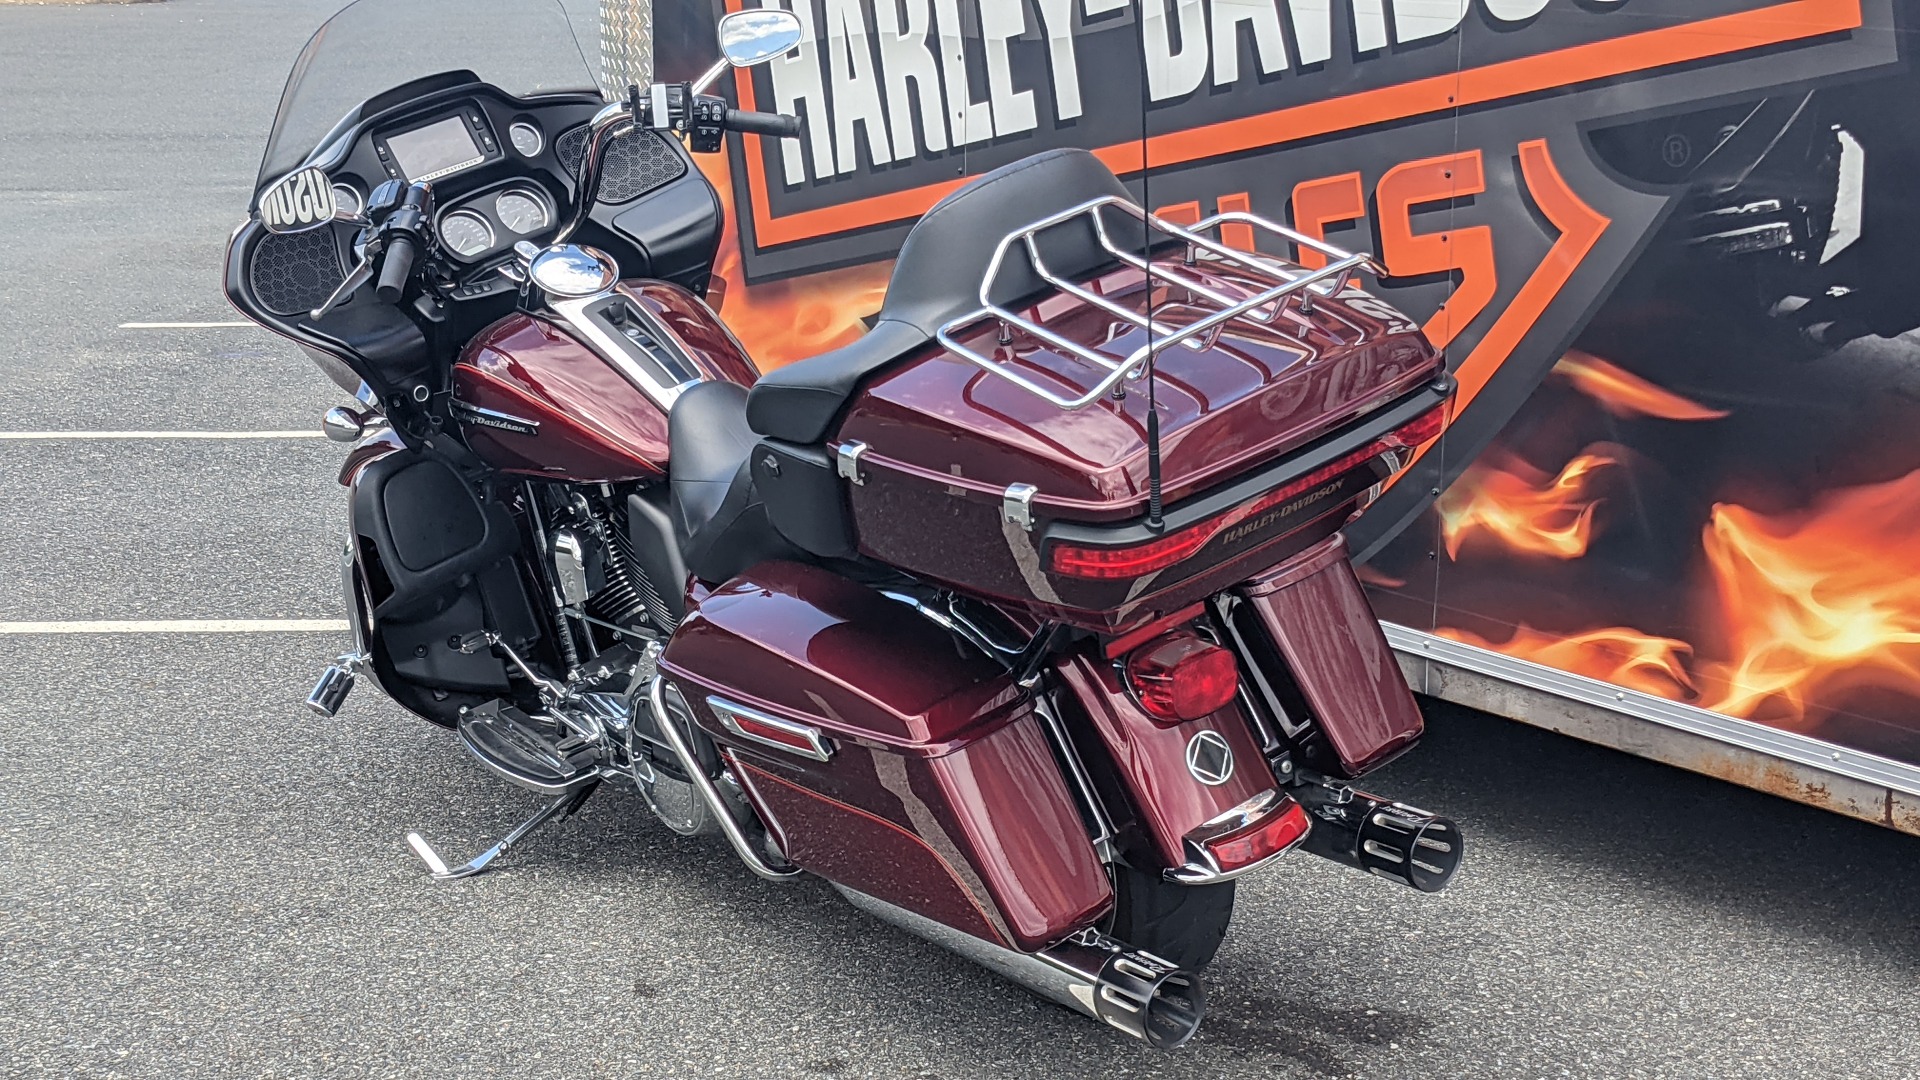 2016 Harley-Davidson Road Glide® Ultra in Fredericksburg, Virginia - Photo 6